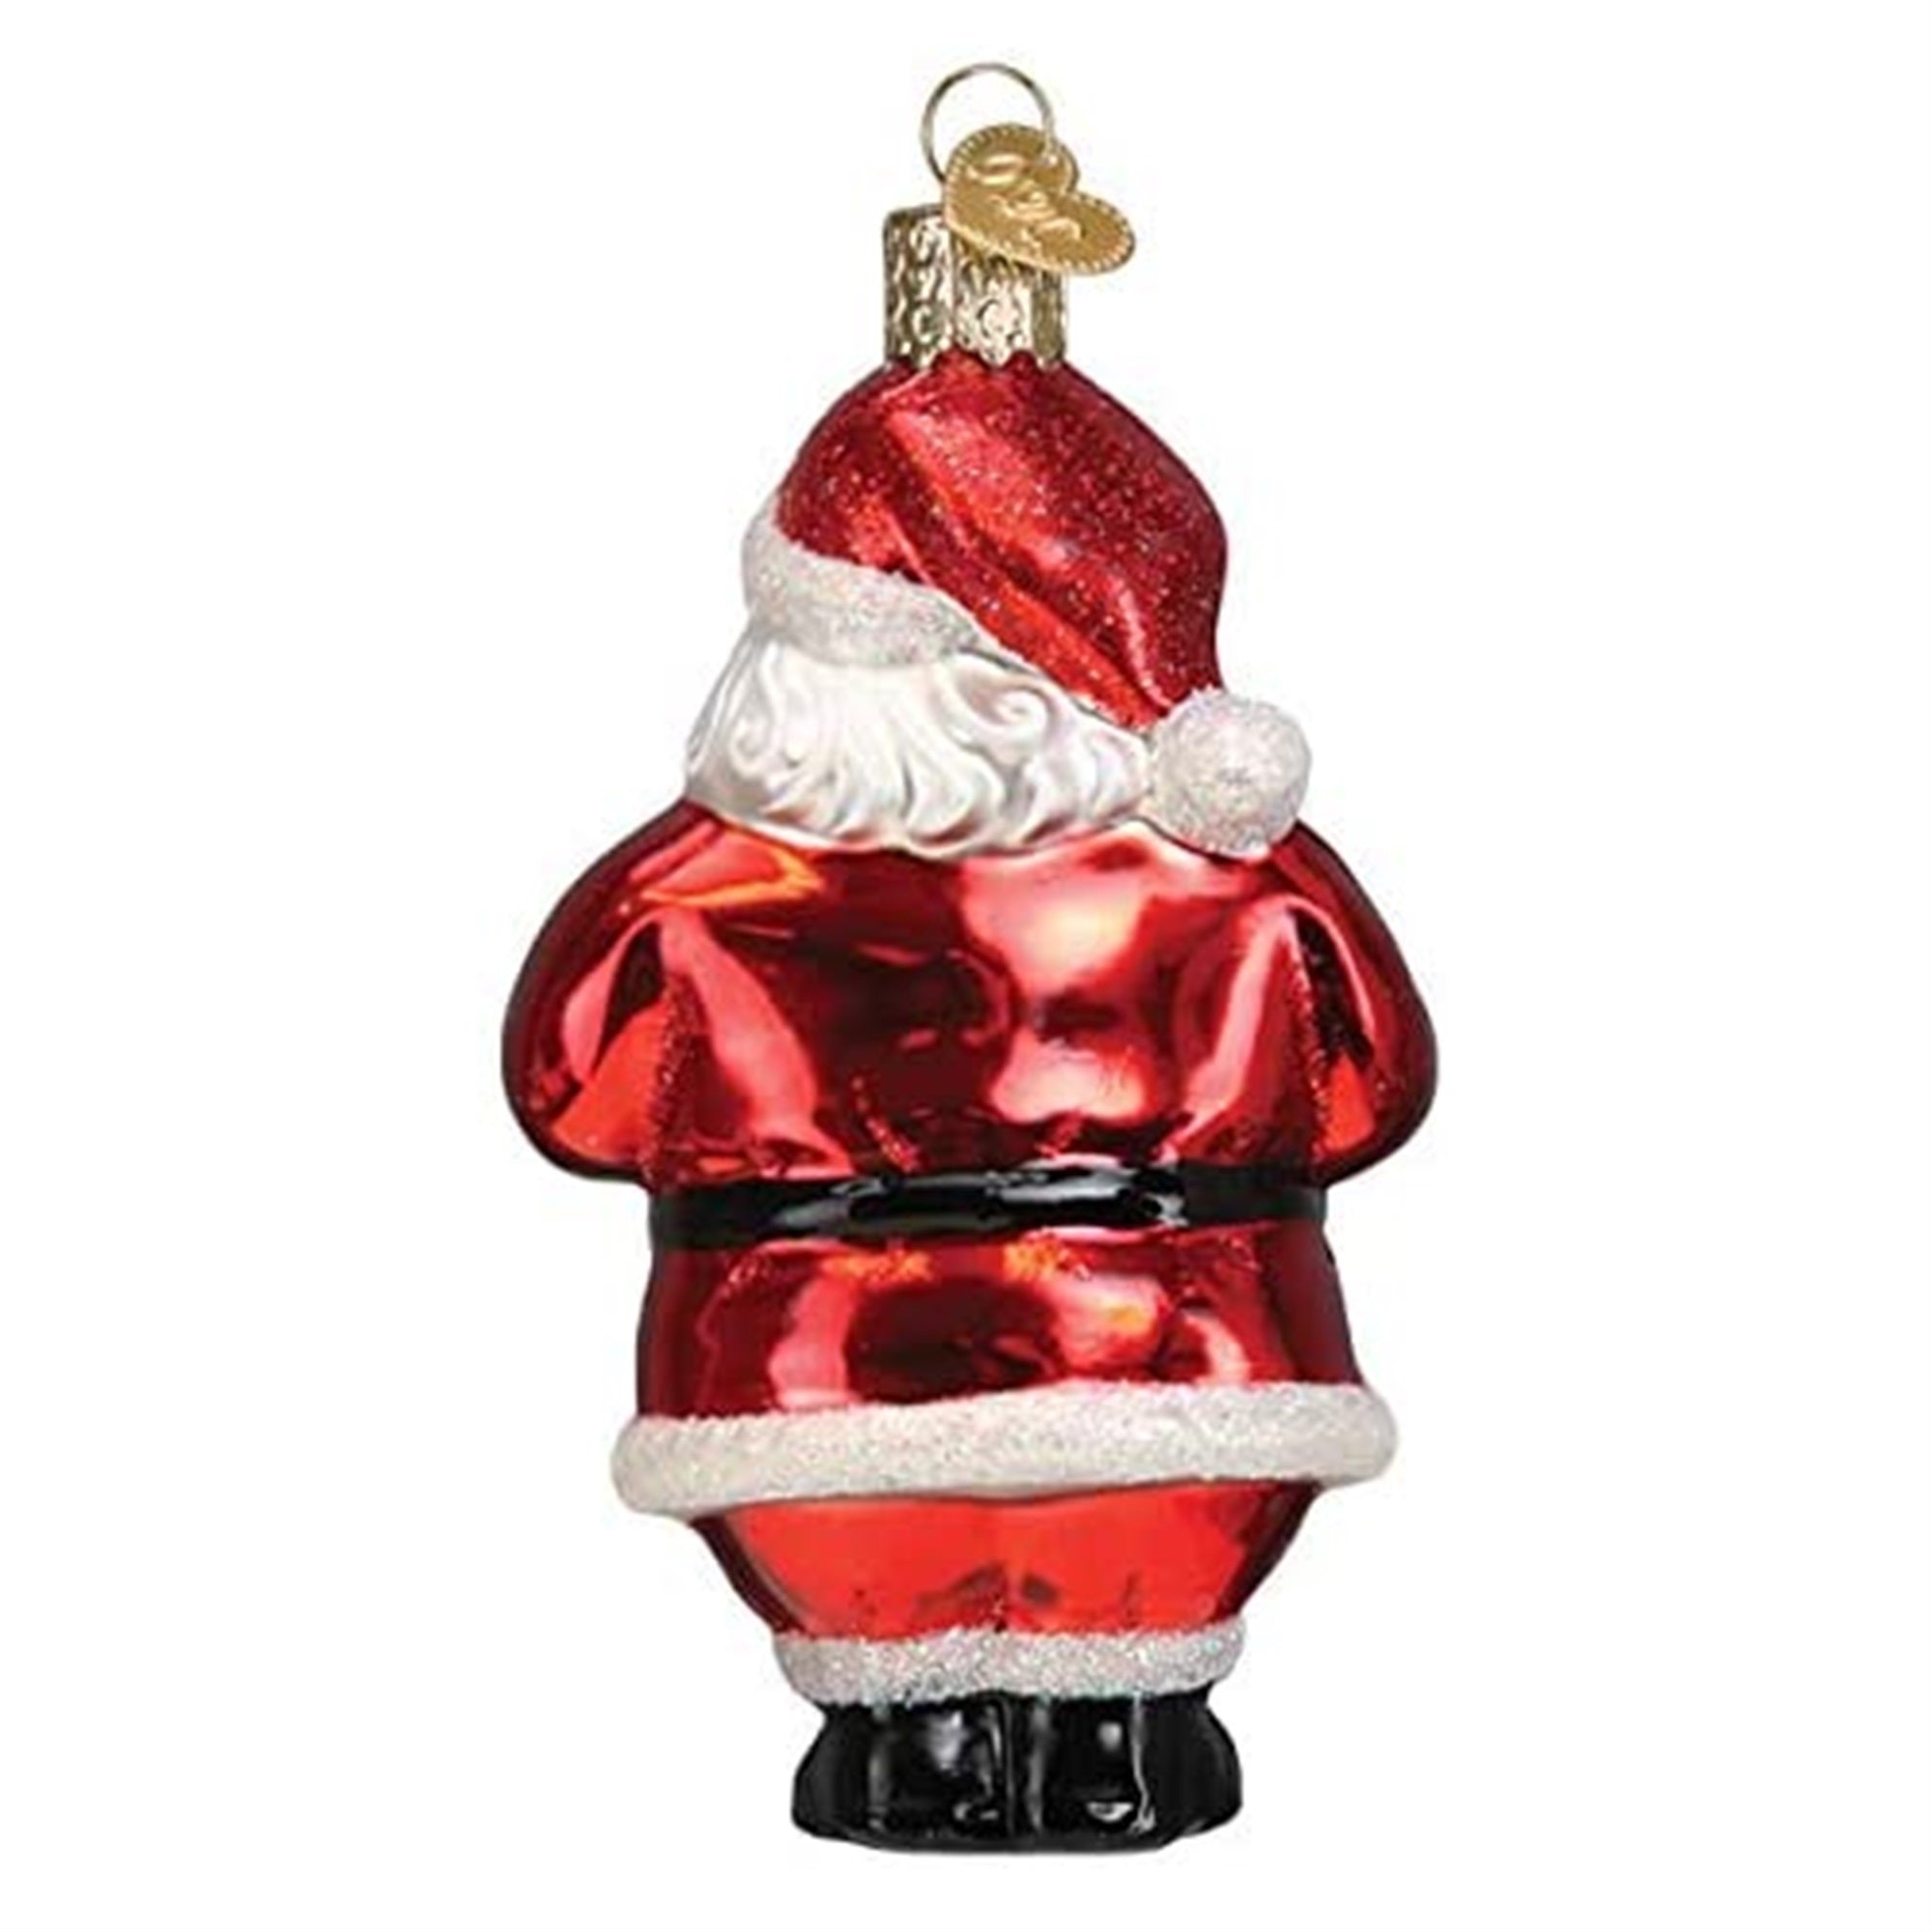 Old World Christmas Glass Blown Ornaments Santa Revealed, 4.5"